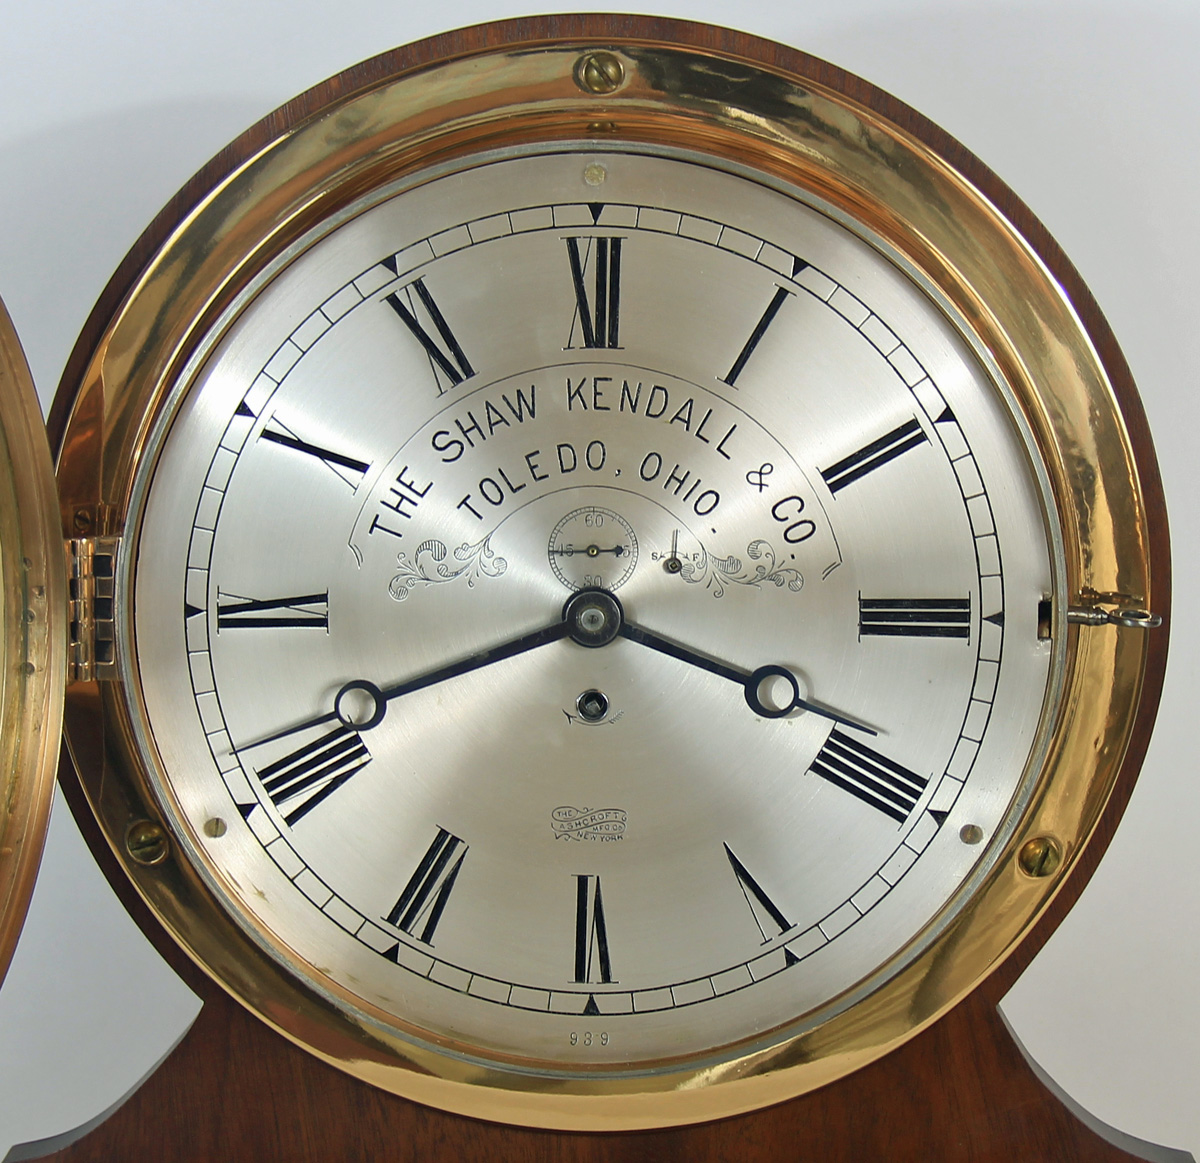 Eastman Clock C o. 10" Marine Clock for Shaw Kendall & Co.